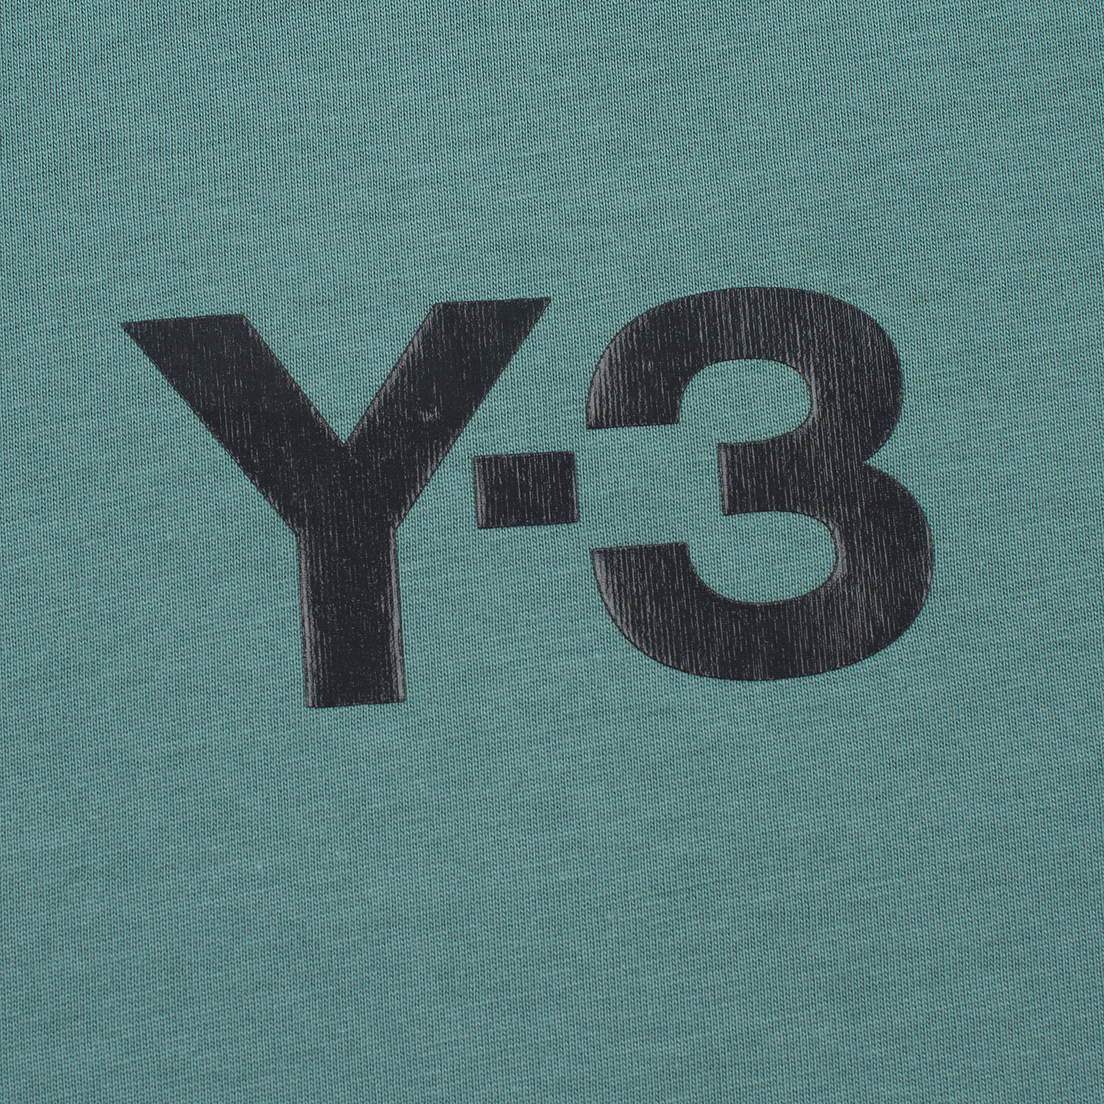 Y-3 Мужская футболка Classic Logo Round Neck